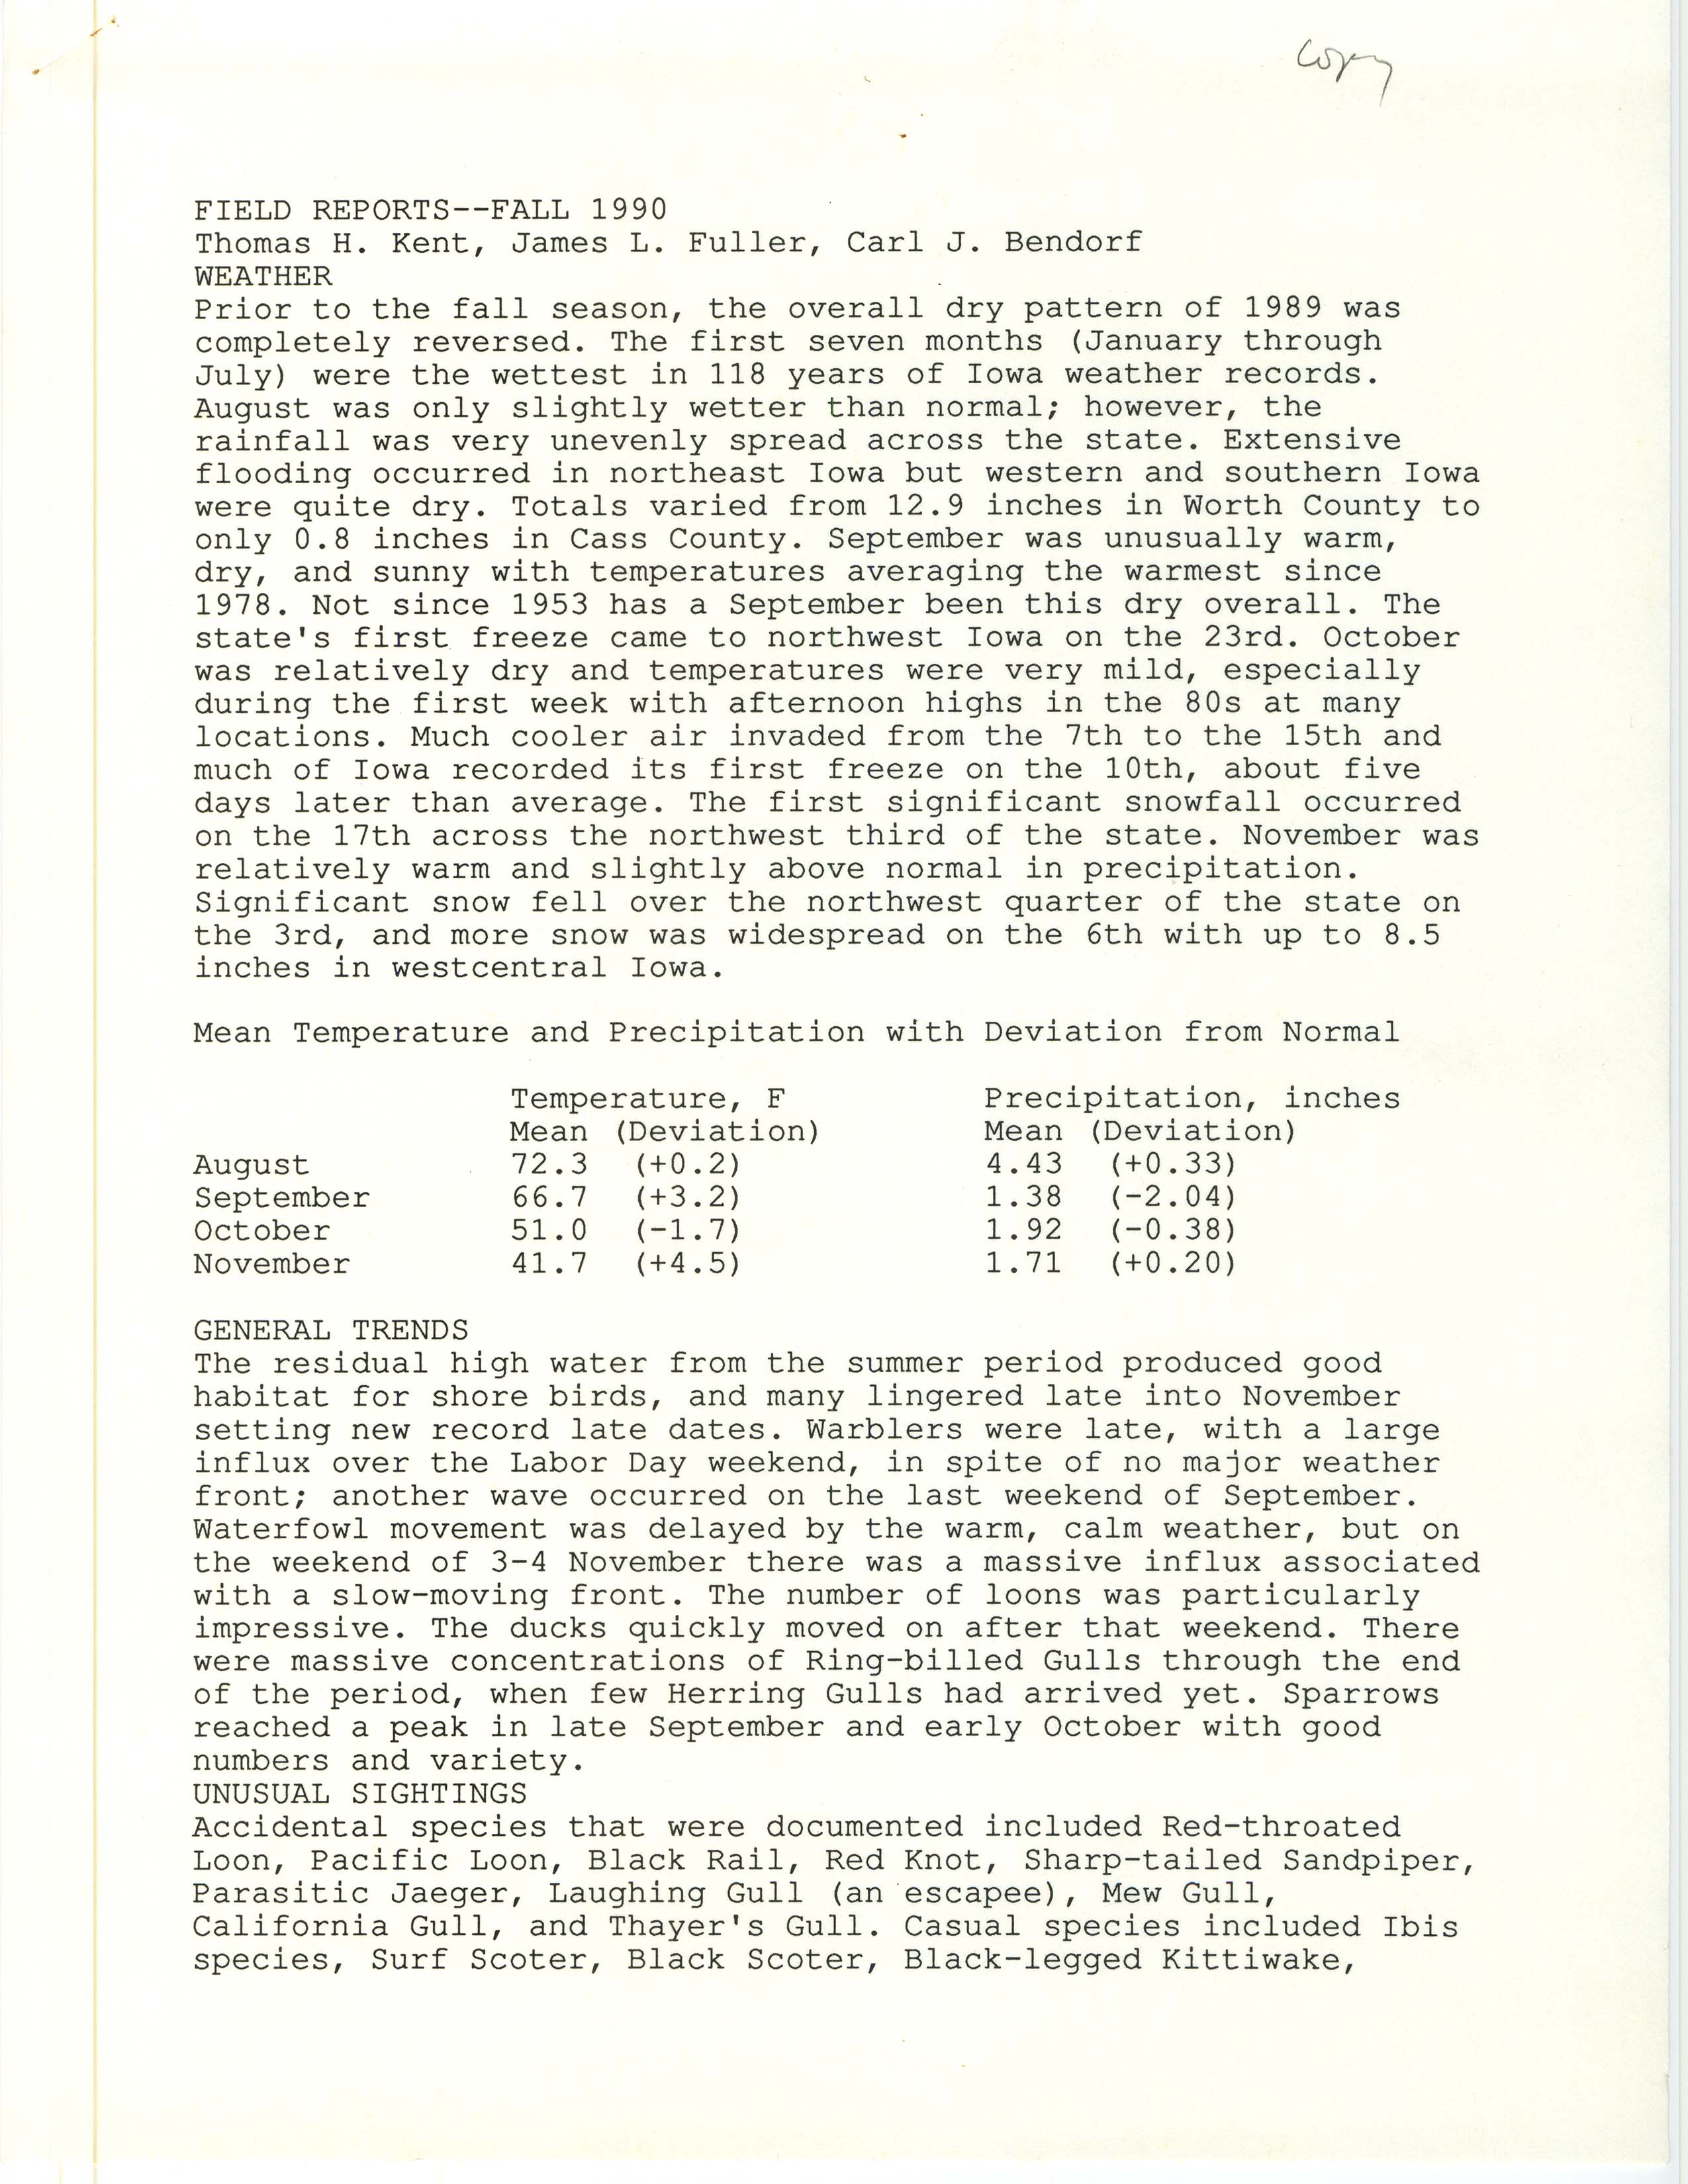 Iowa Ornithologists' Union, Quarterly field report, fall 1990